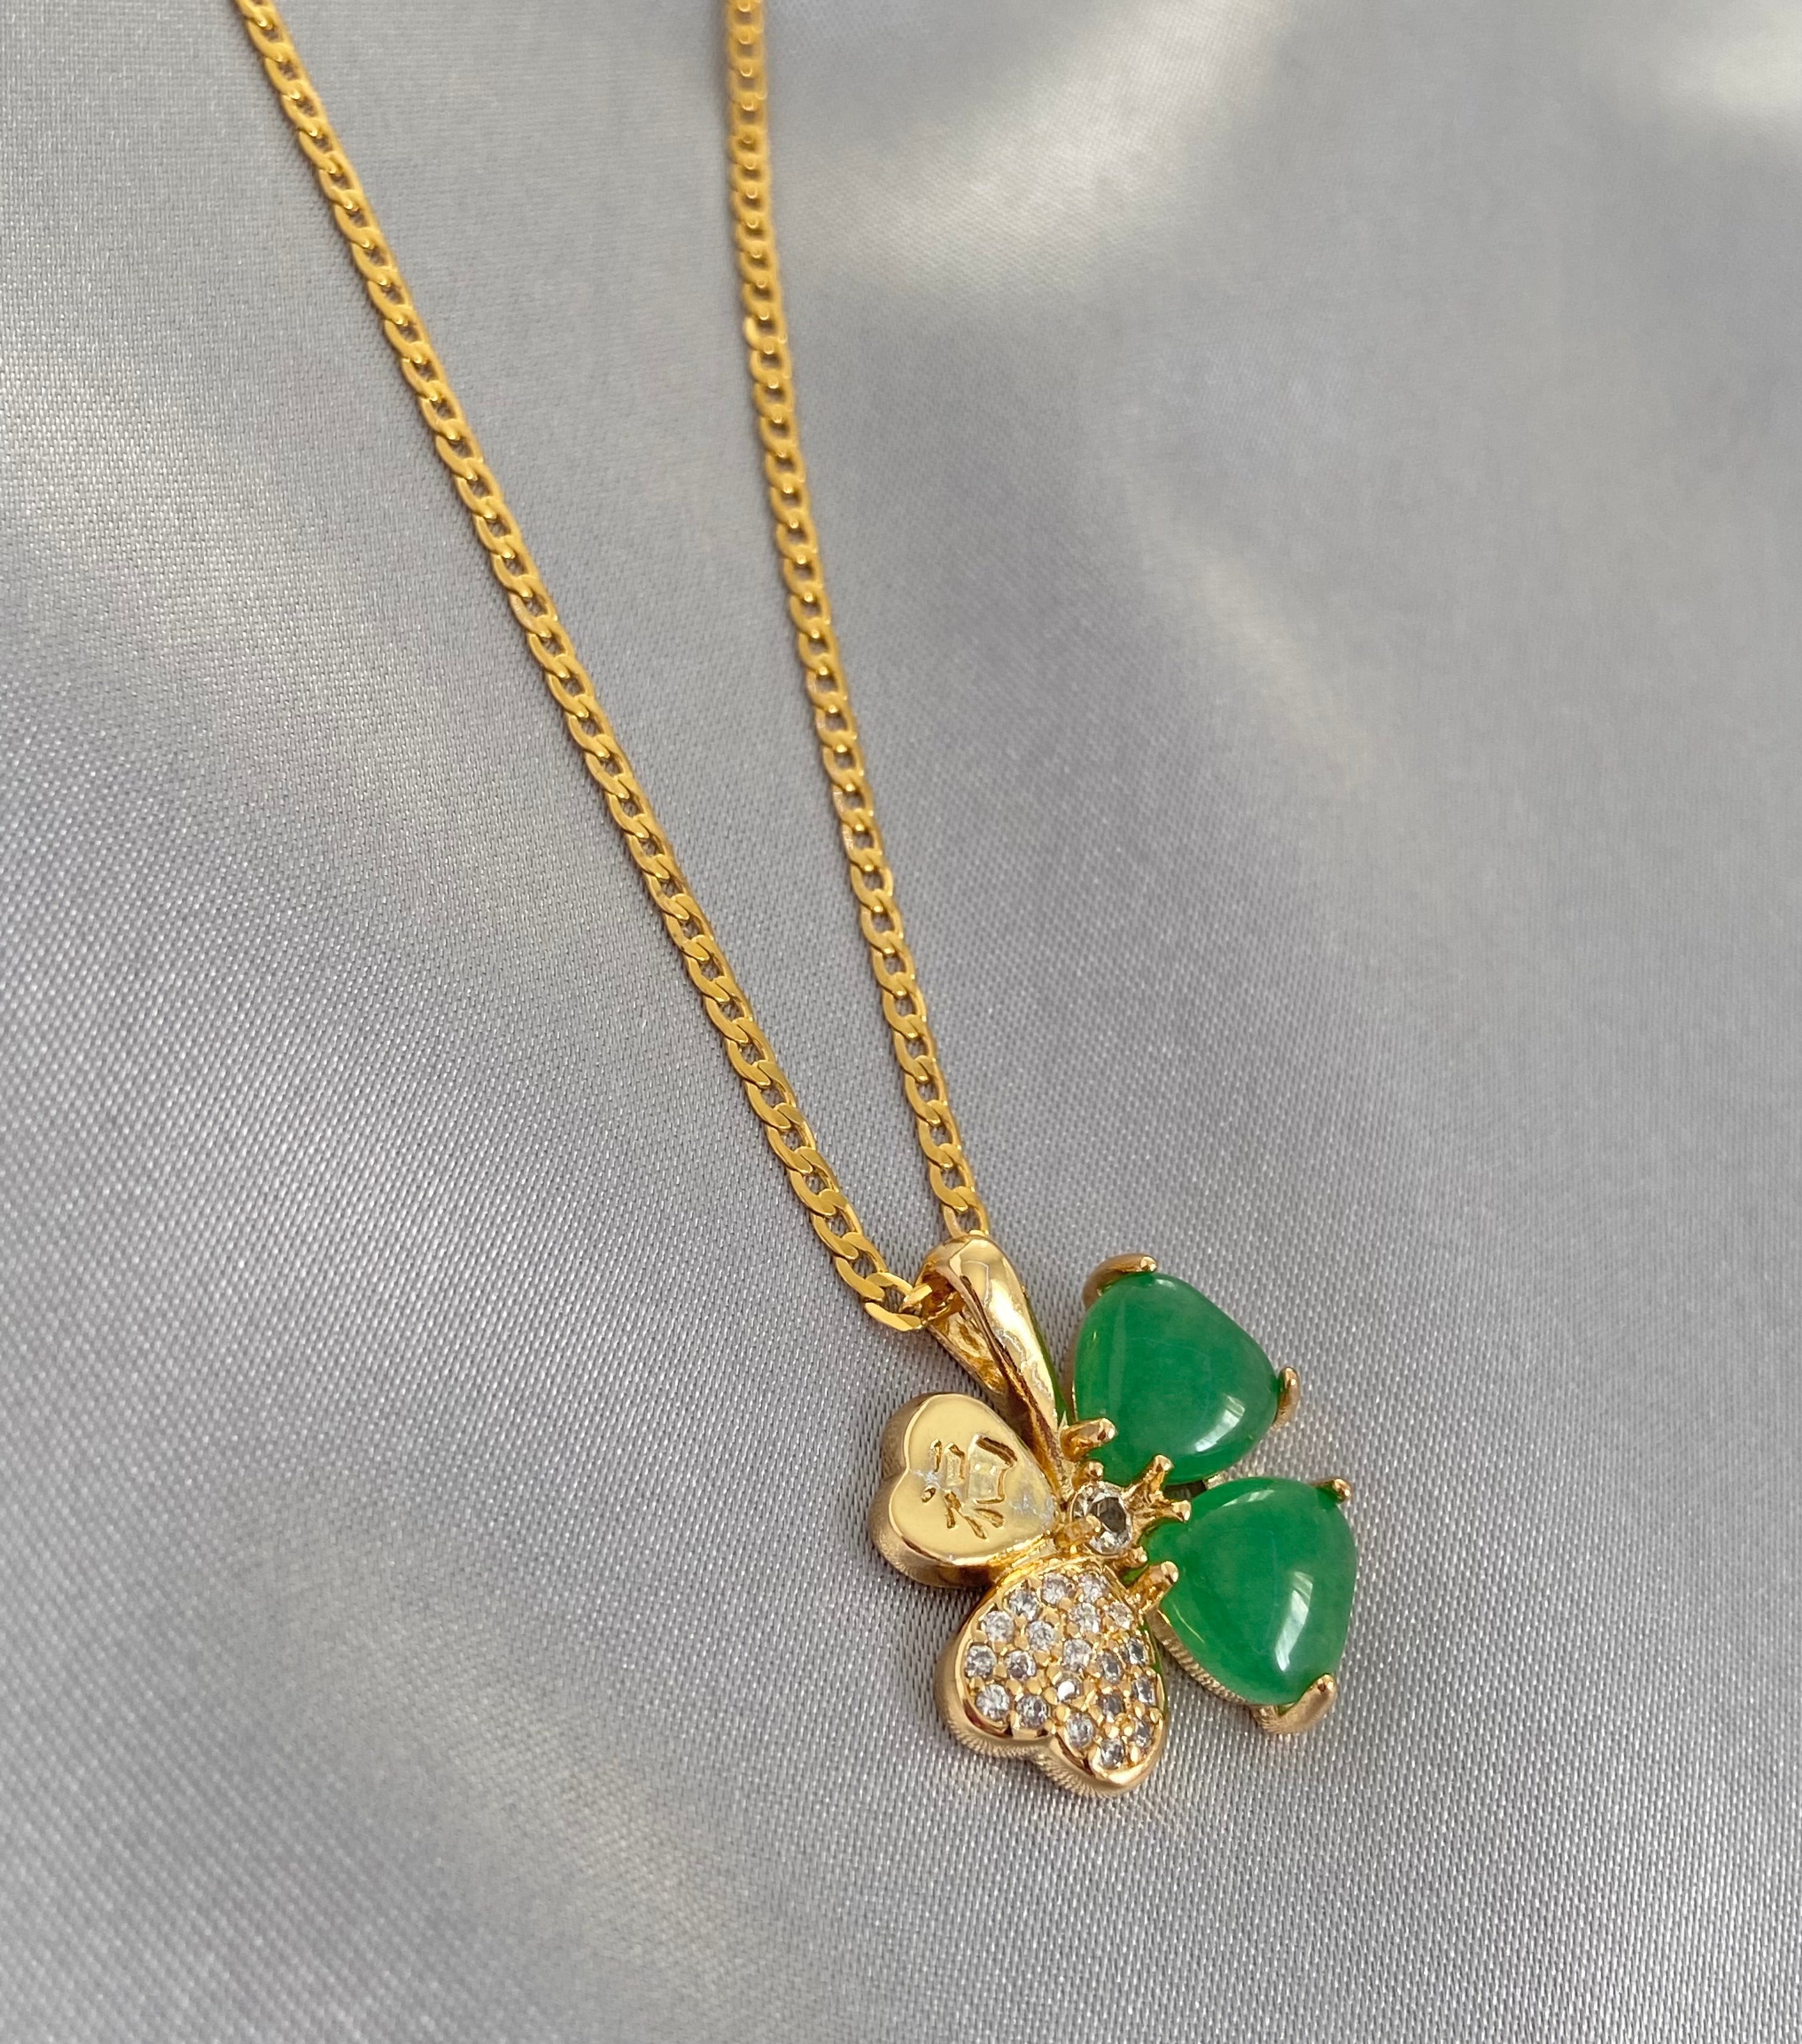 Clover Good Fortune Jade Necklace Gold